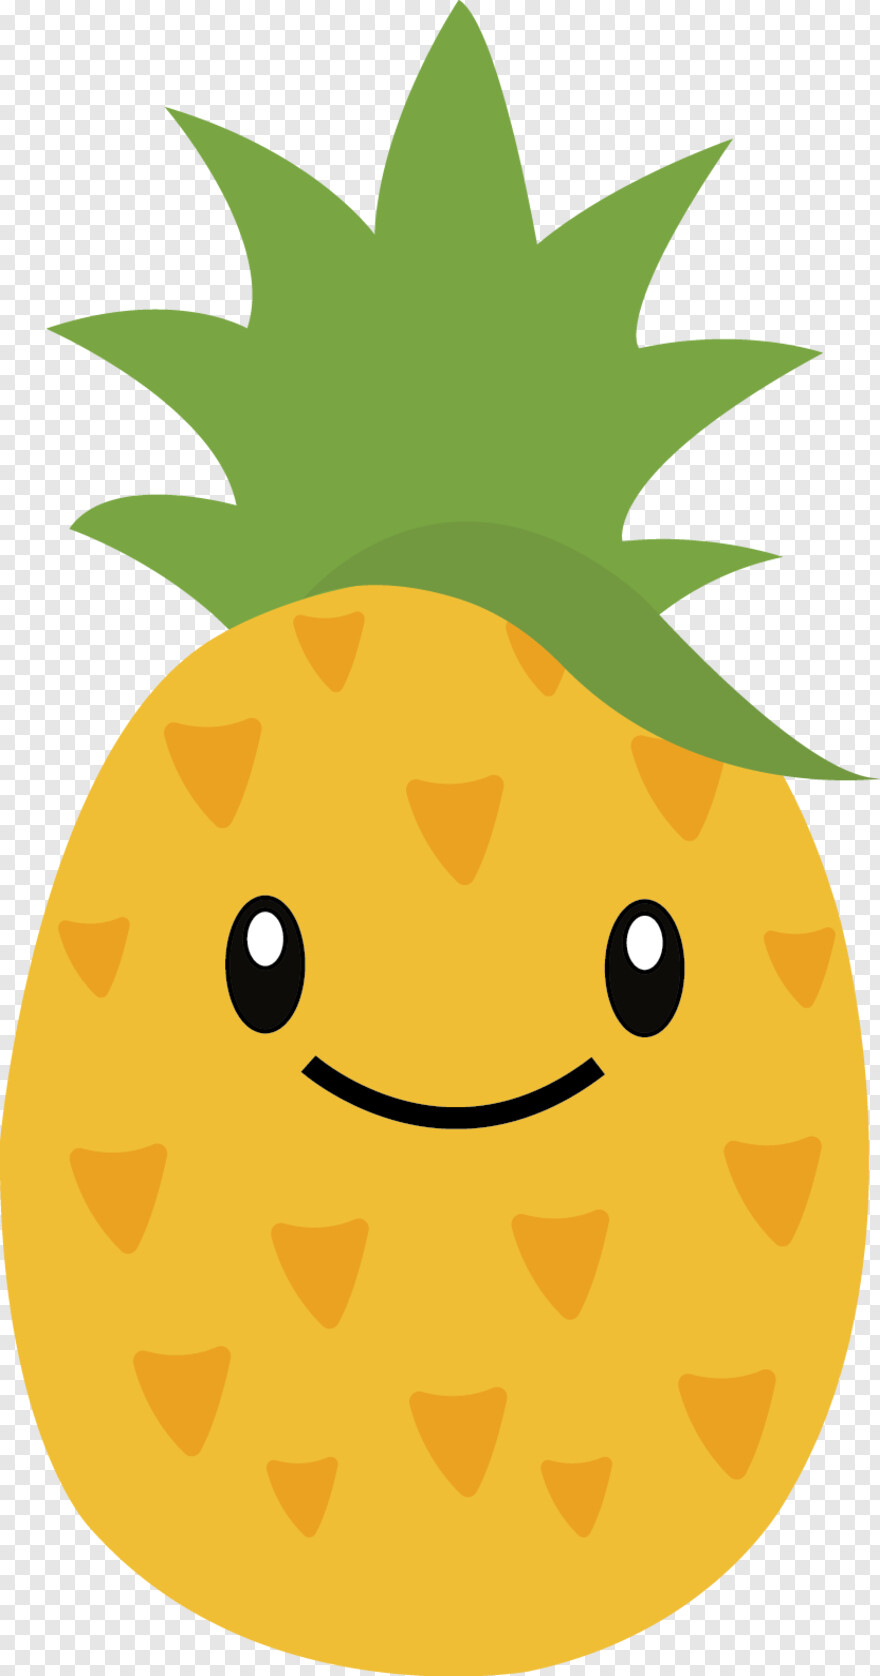 pineapple # 850255